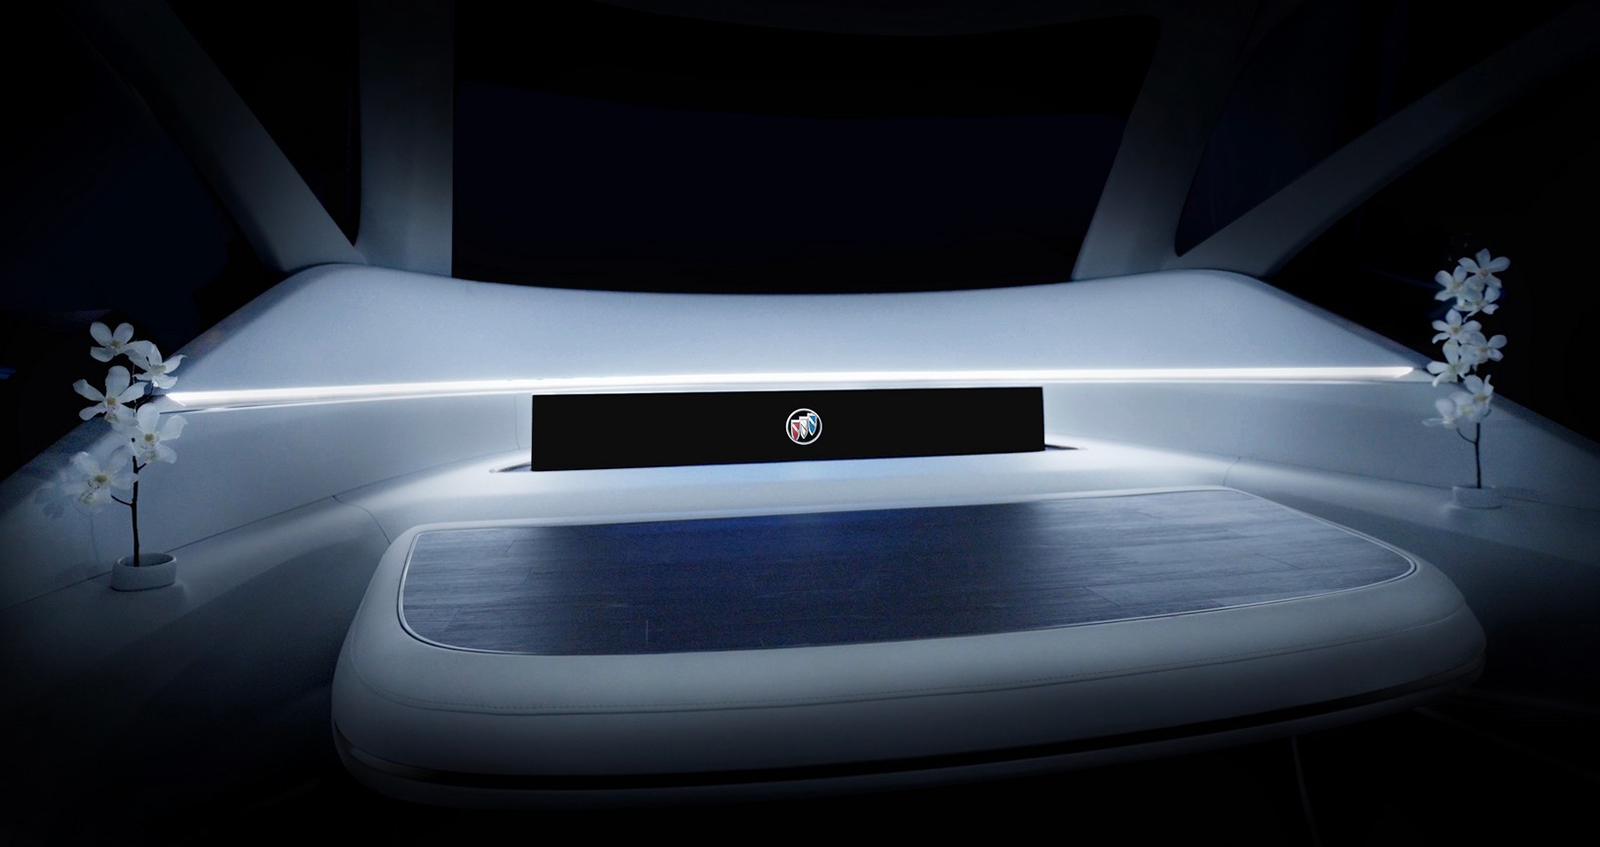 Buick จะเปิดตัว Smart Pod ภายในที่หรูหราของรถยนต์ยุคใหม่